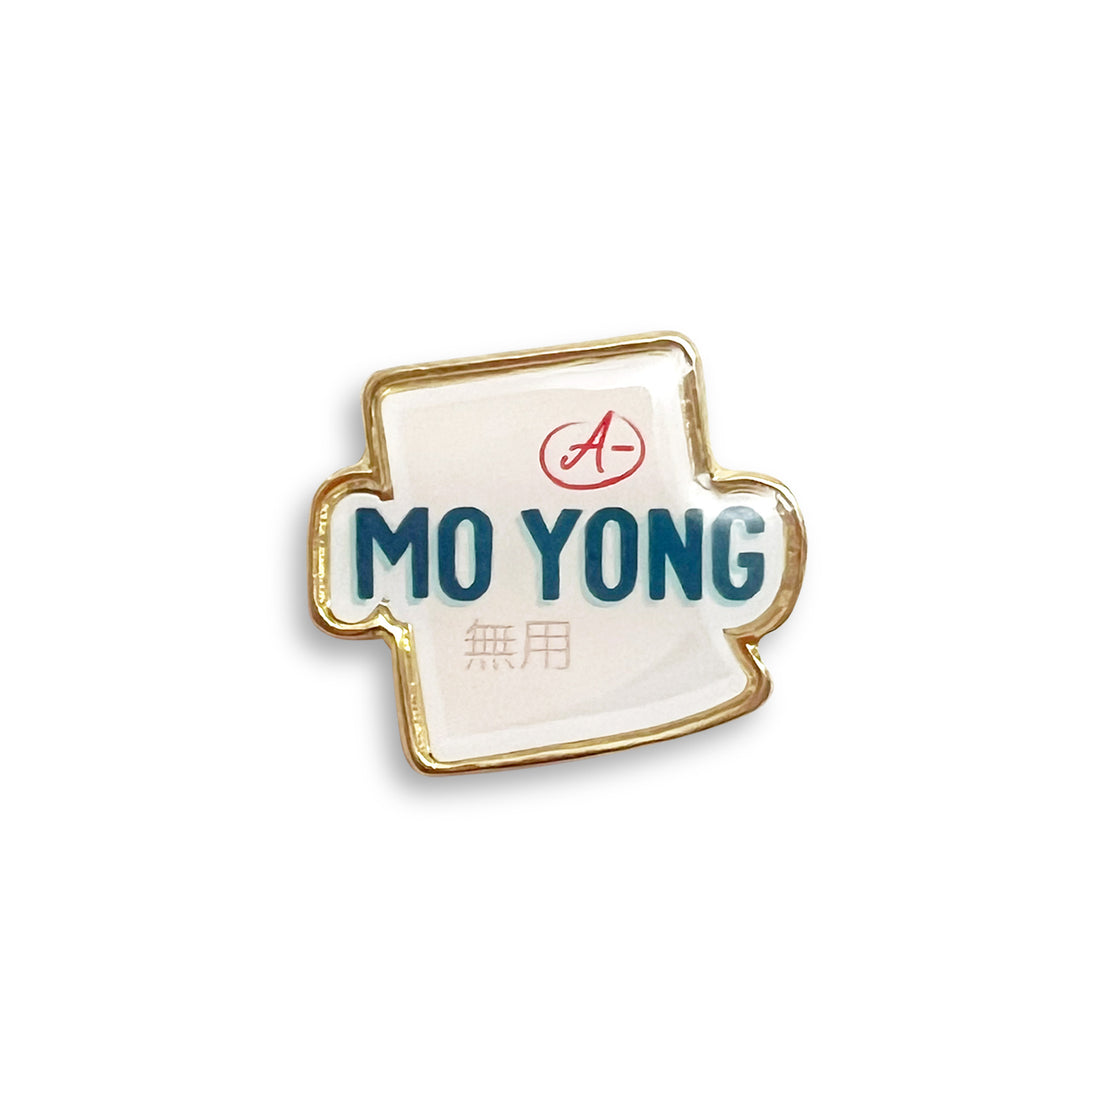 Mo yong (無用) lapel pin by I&